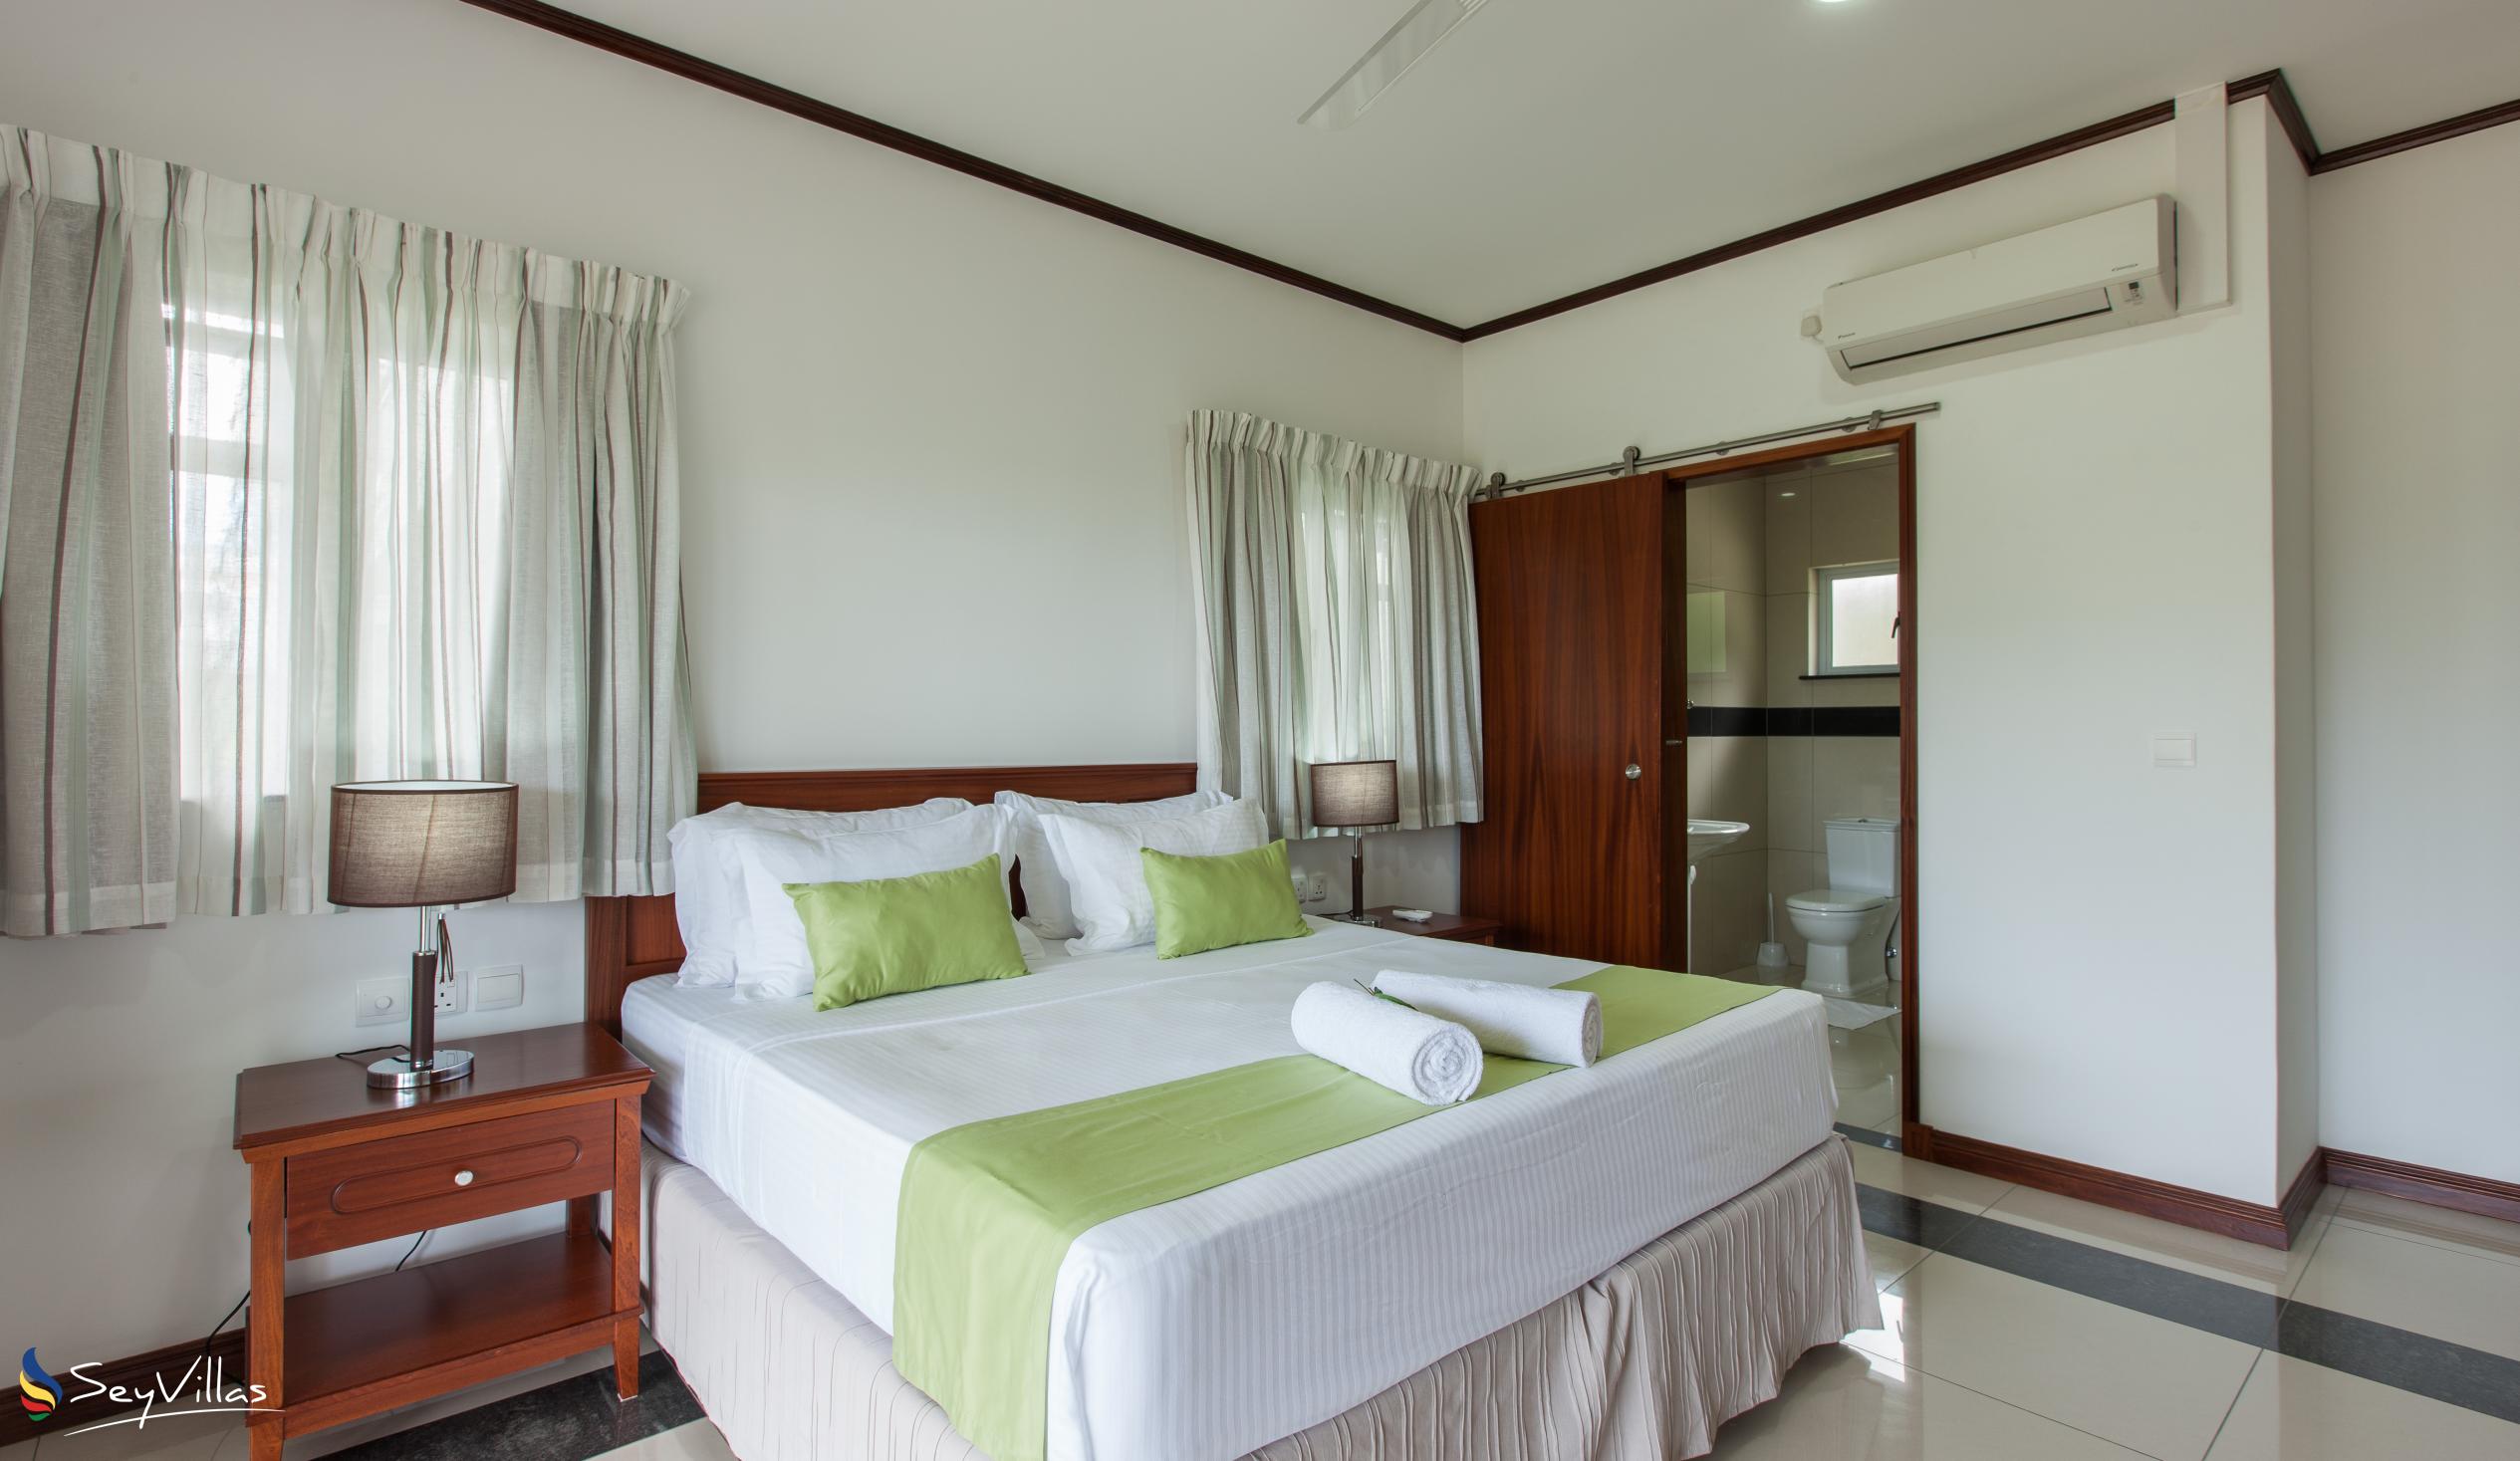 Photo 95: Bambous River Lodge - 2-Bedroom Villa - Mahé (Seychelles)